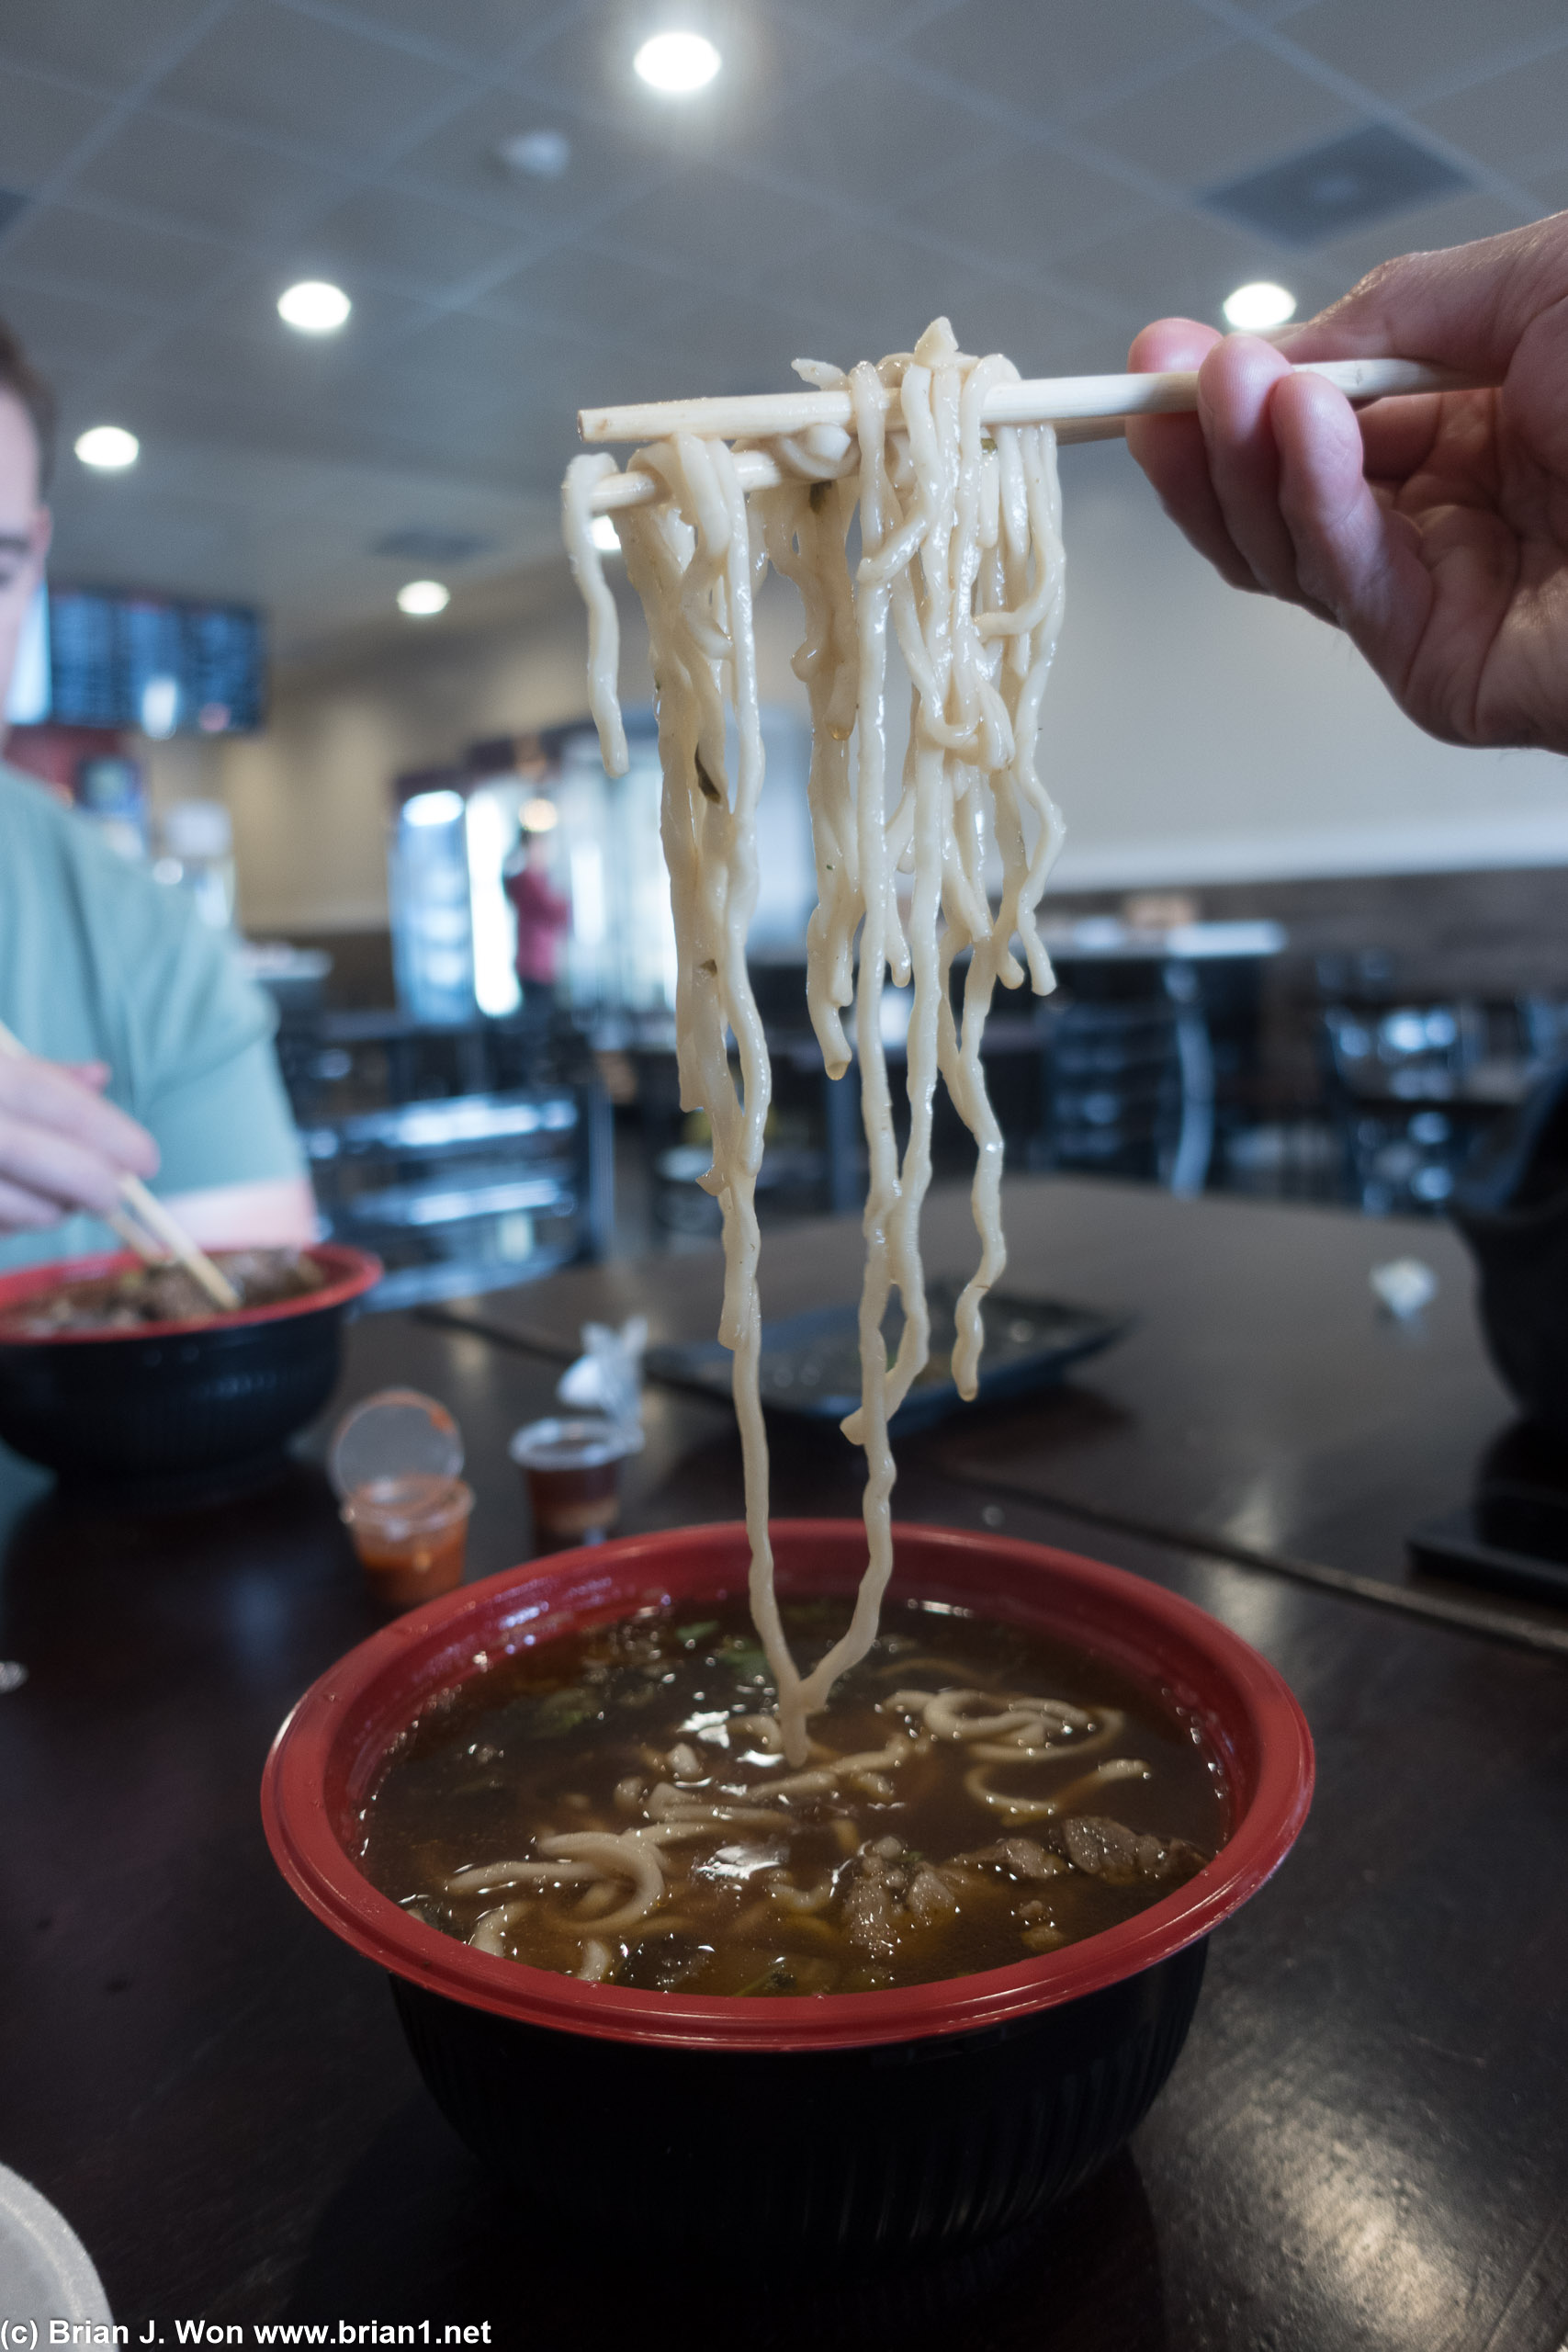 Beef noodle soup was okay, too.